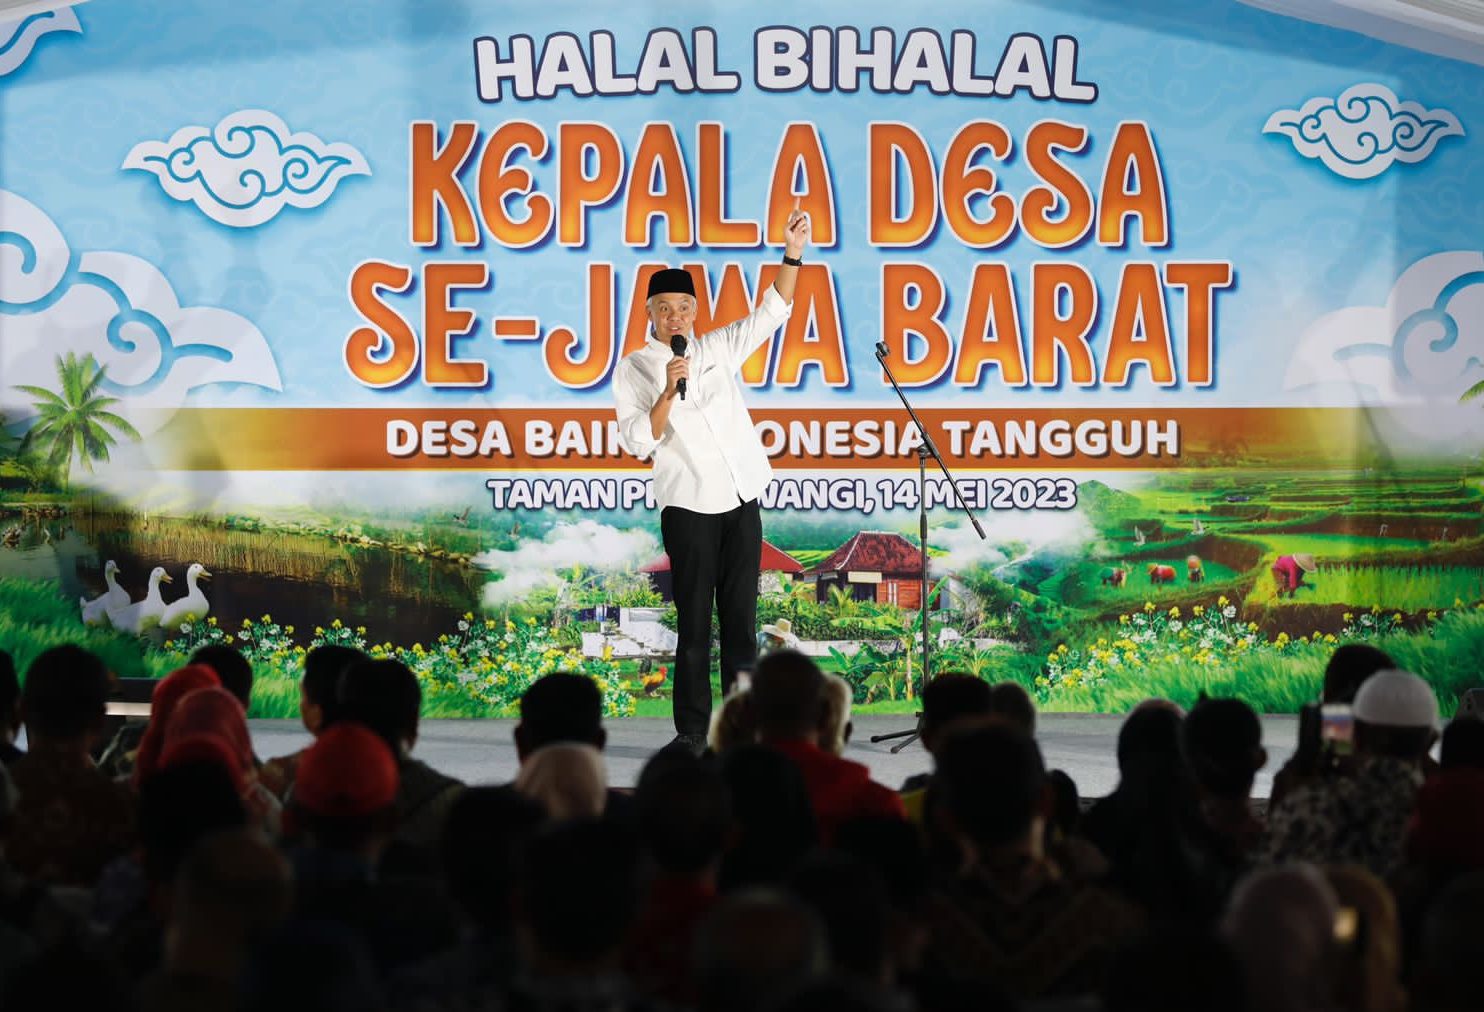 Safari politik ke Kota Bandung, Ganjar Pranowo berkesempatan menggelar acara halal bihalal dengan 4.01 kepala desa se Jawa Barat.